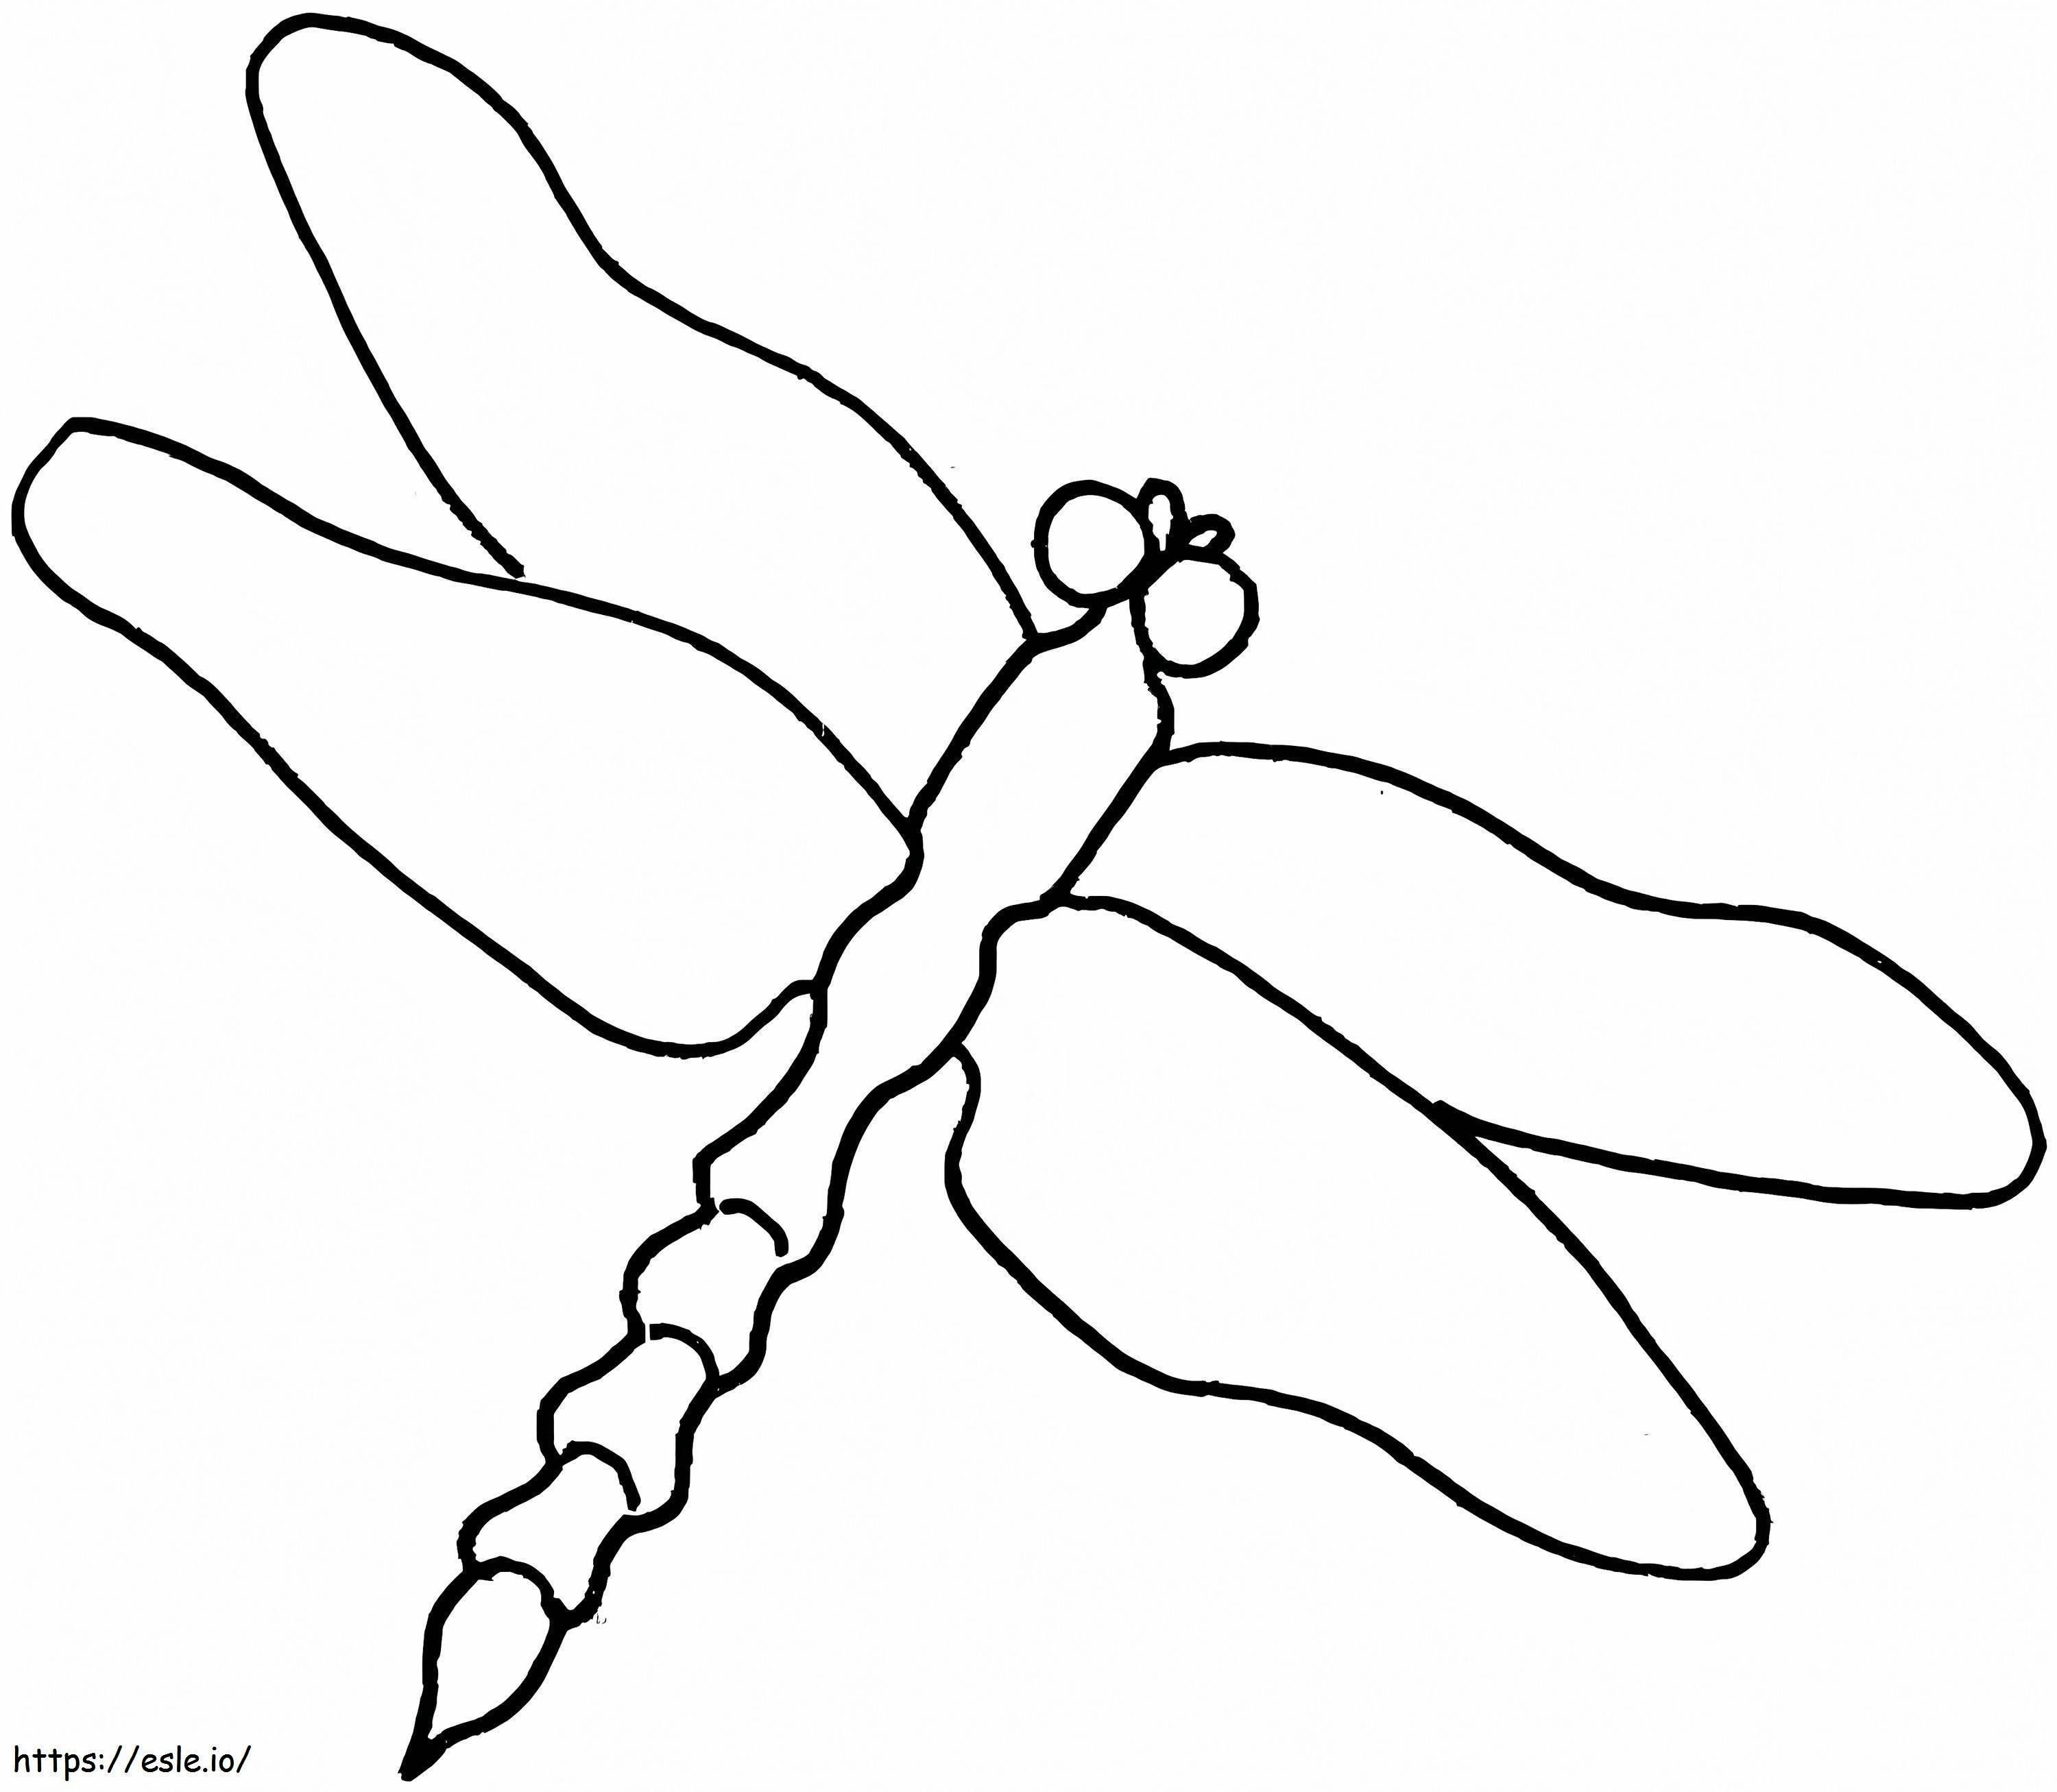 Einfache Libelle ausmalbilder